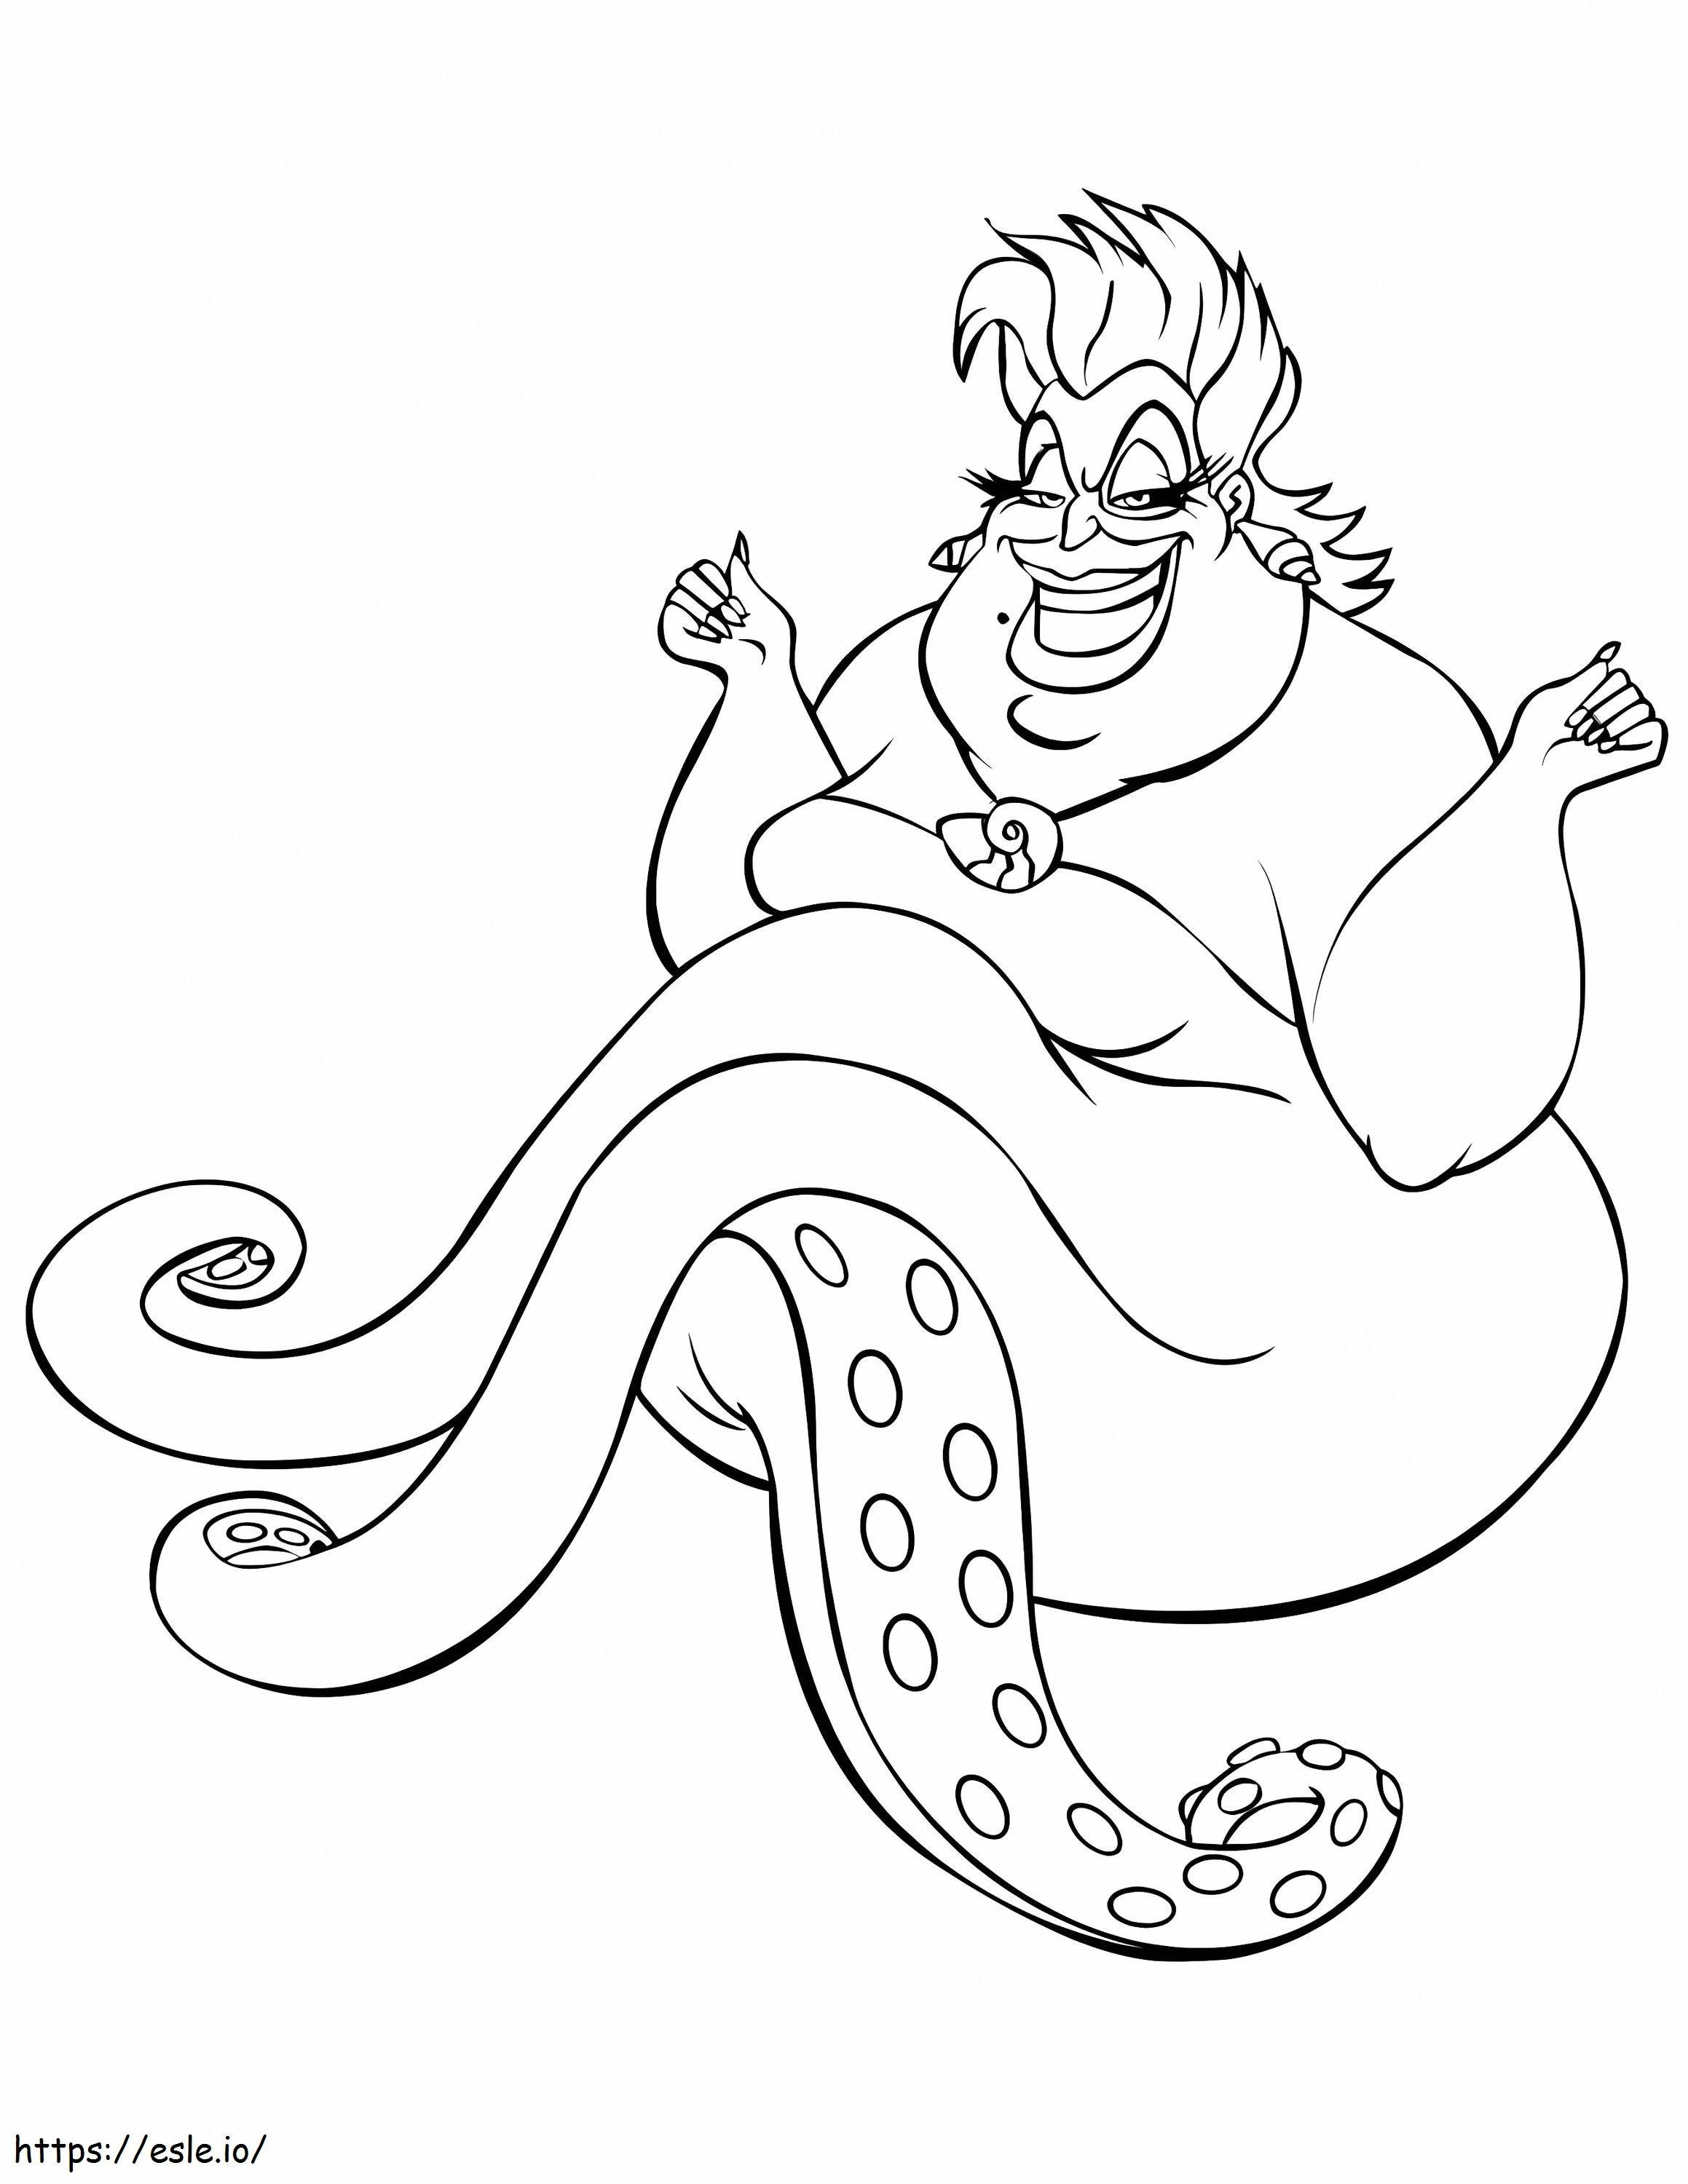 Ursula Disney Villain coloring page